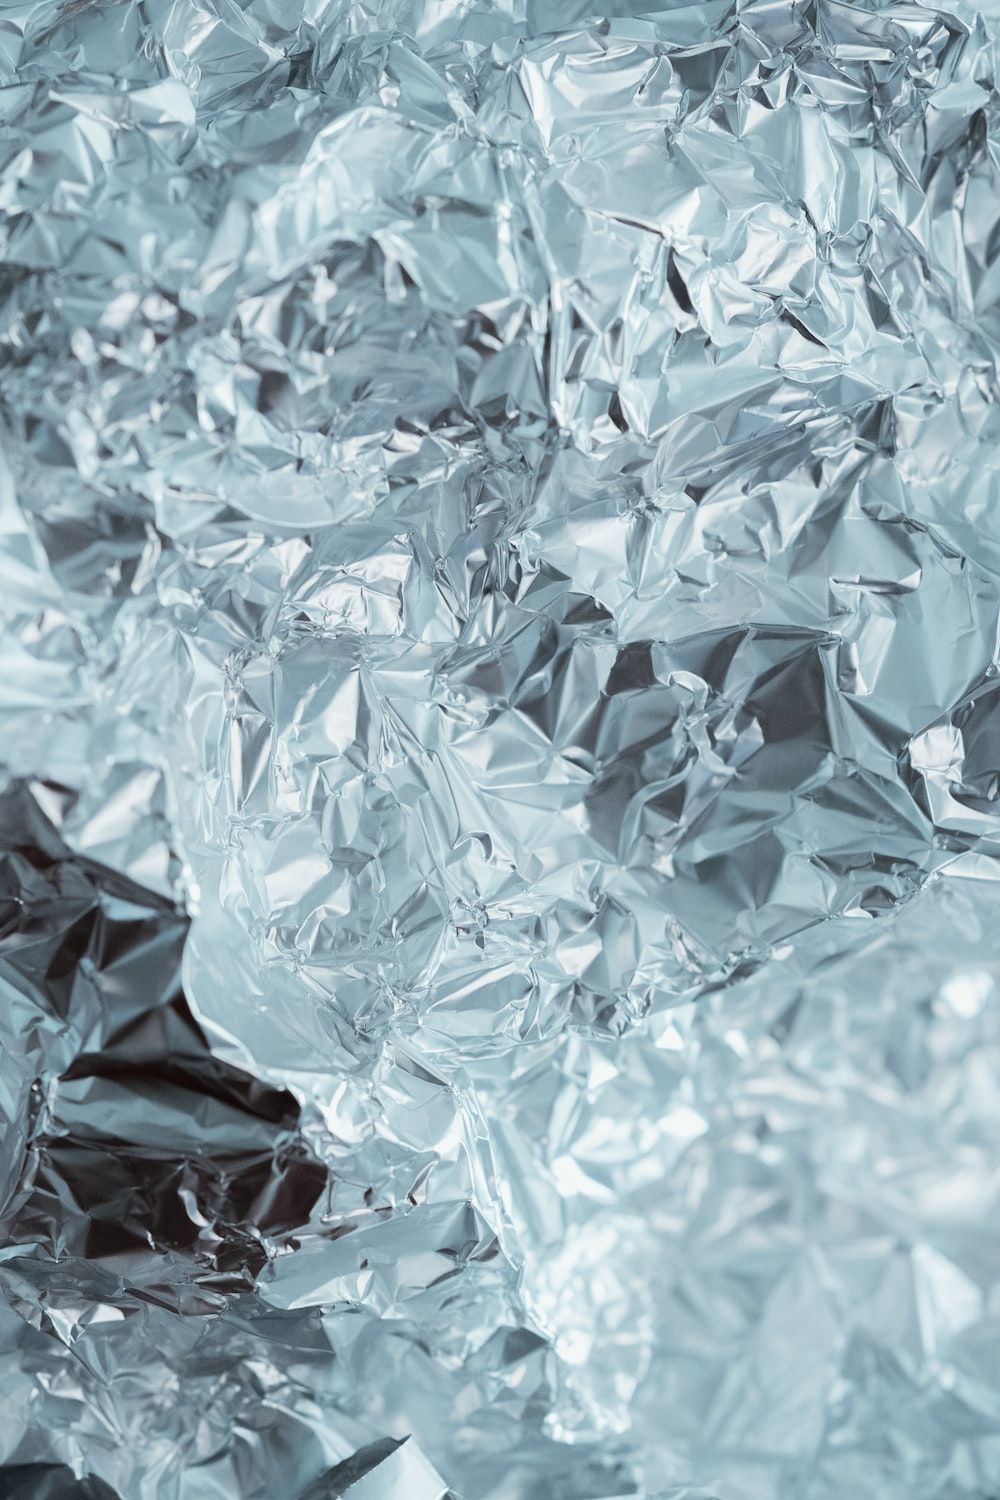 A close up of some aluminum foil - Silver, diamond